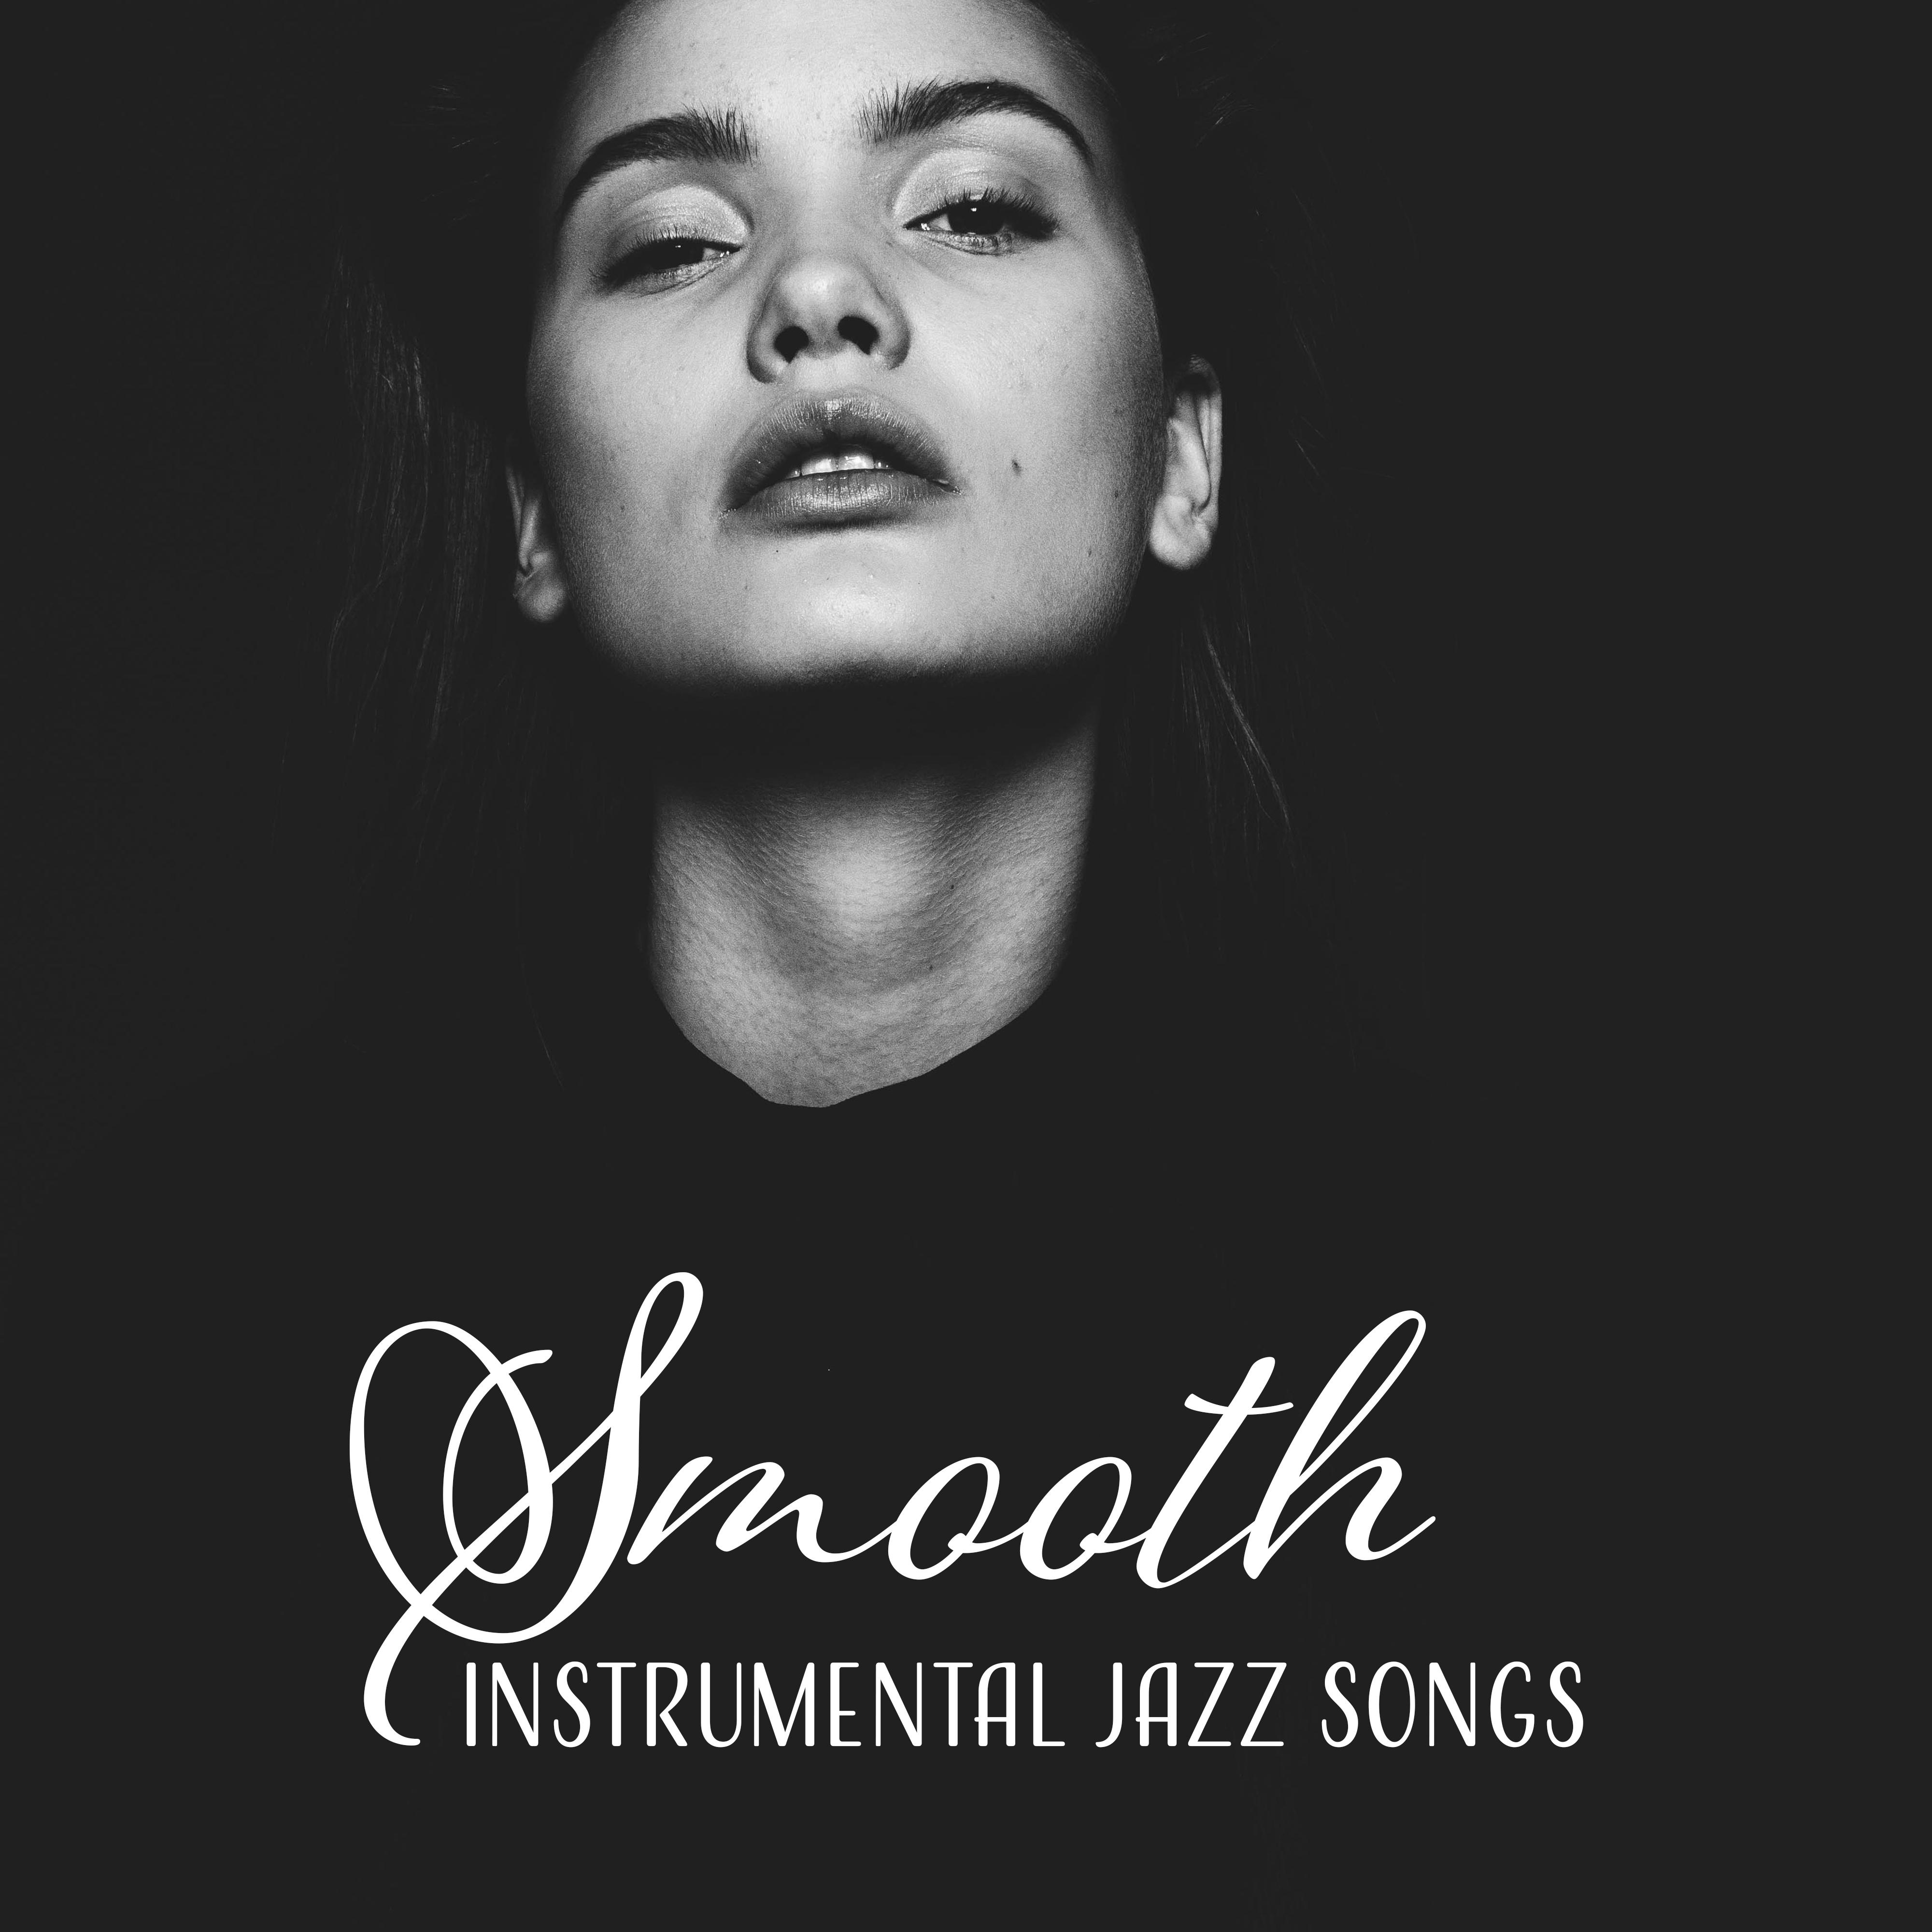 Smooth Instrumental Jazz Songs Classic Jazz Album, New Music, Instrumental